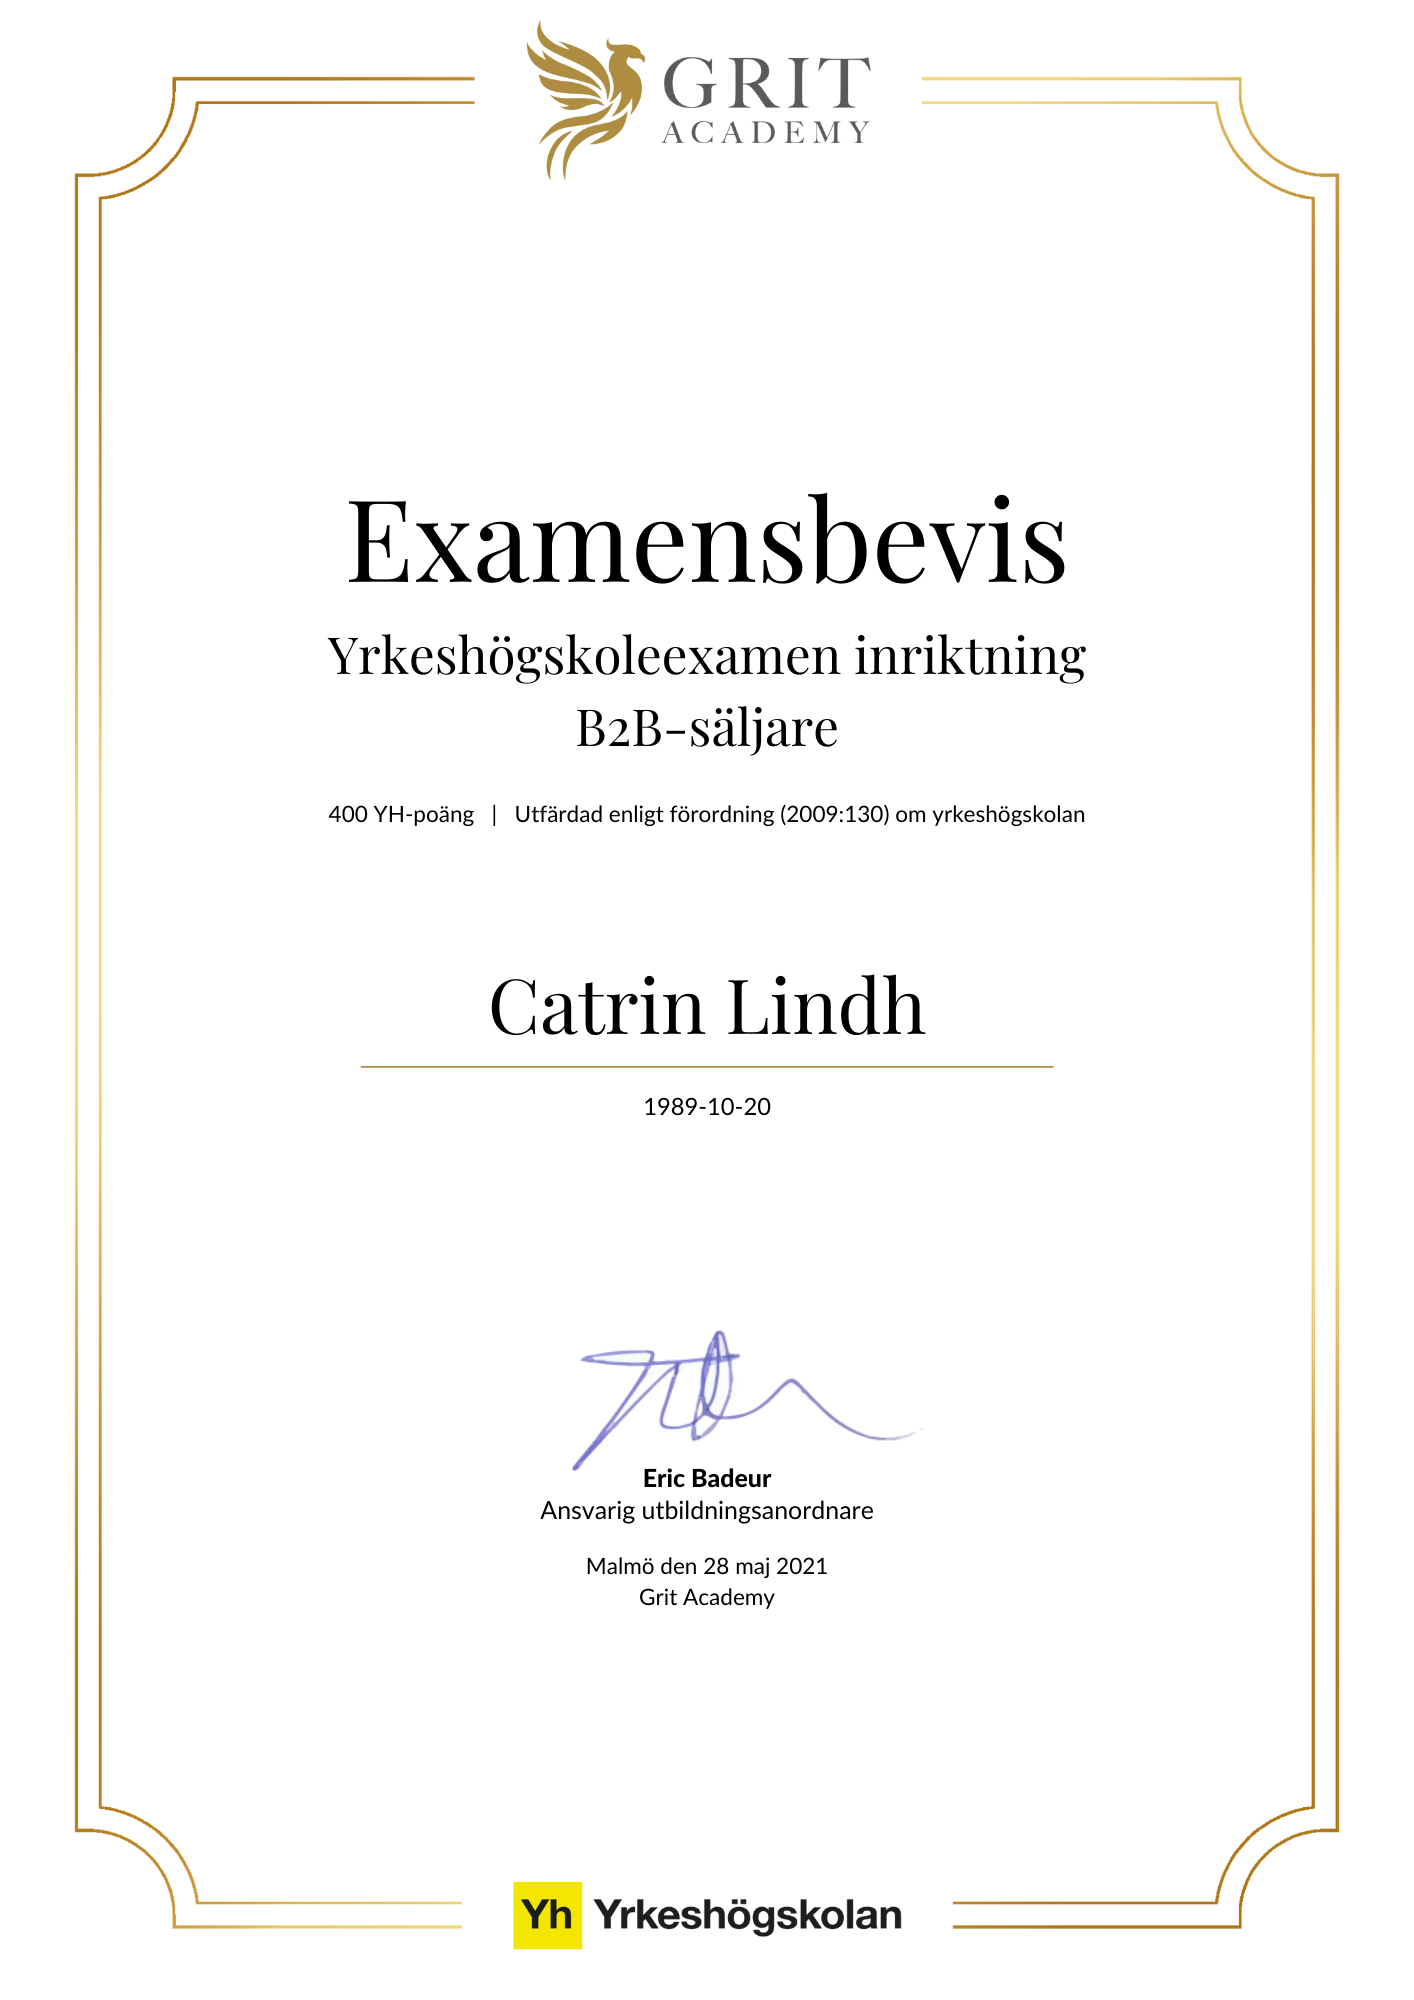 Examensbevis Catrin Lindh - 1